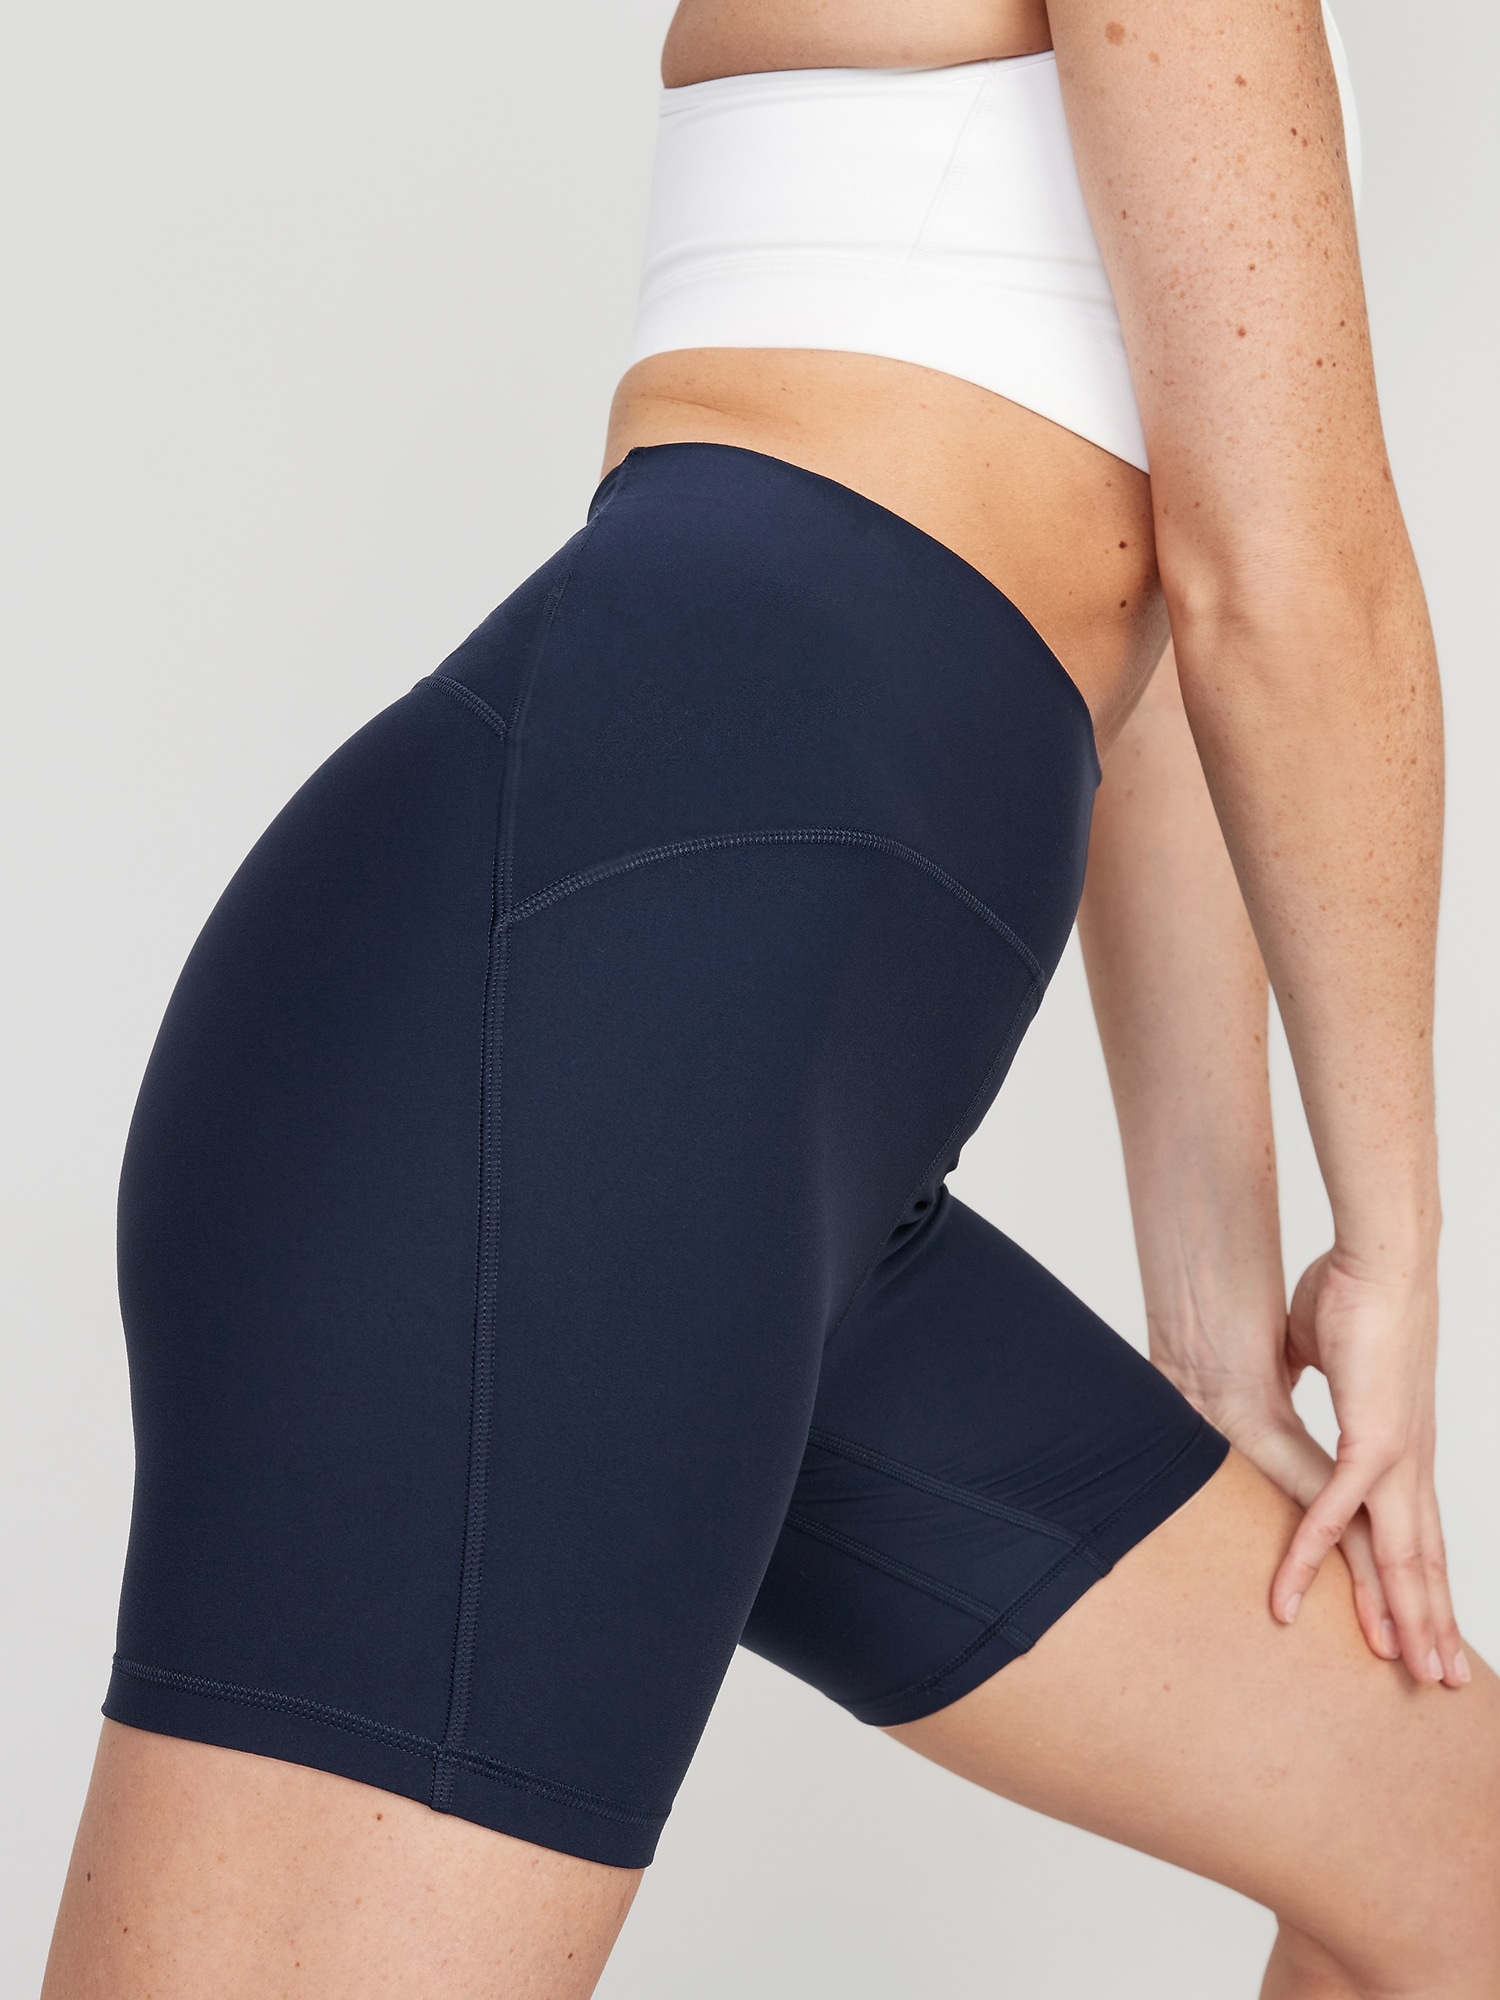 Extra for 6-inch Navy Lycra® Shorts ADAPTIV PowerLite -- | High-Waisted Biker Women Old inseam